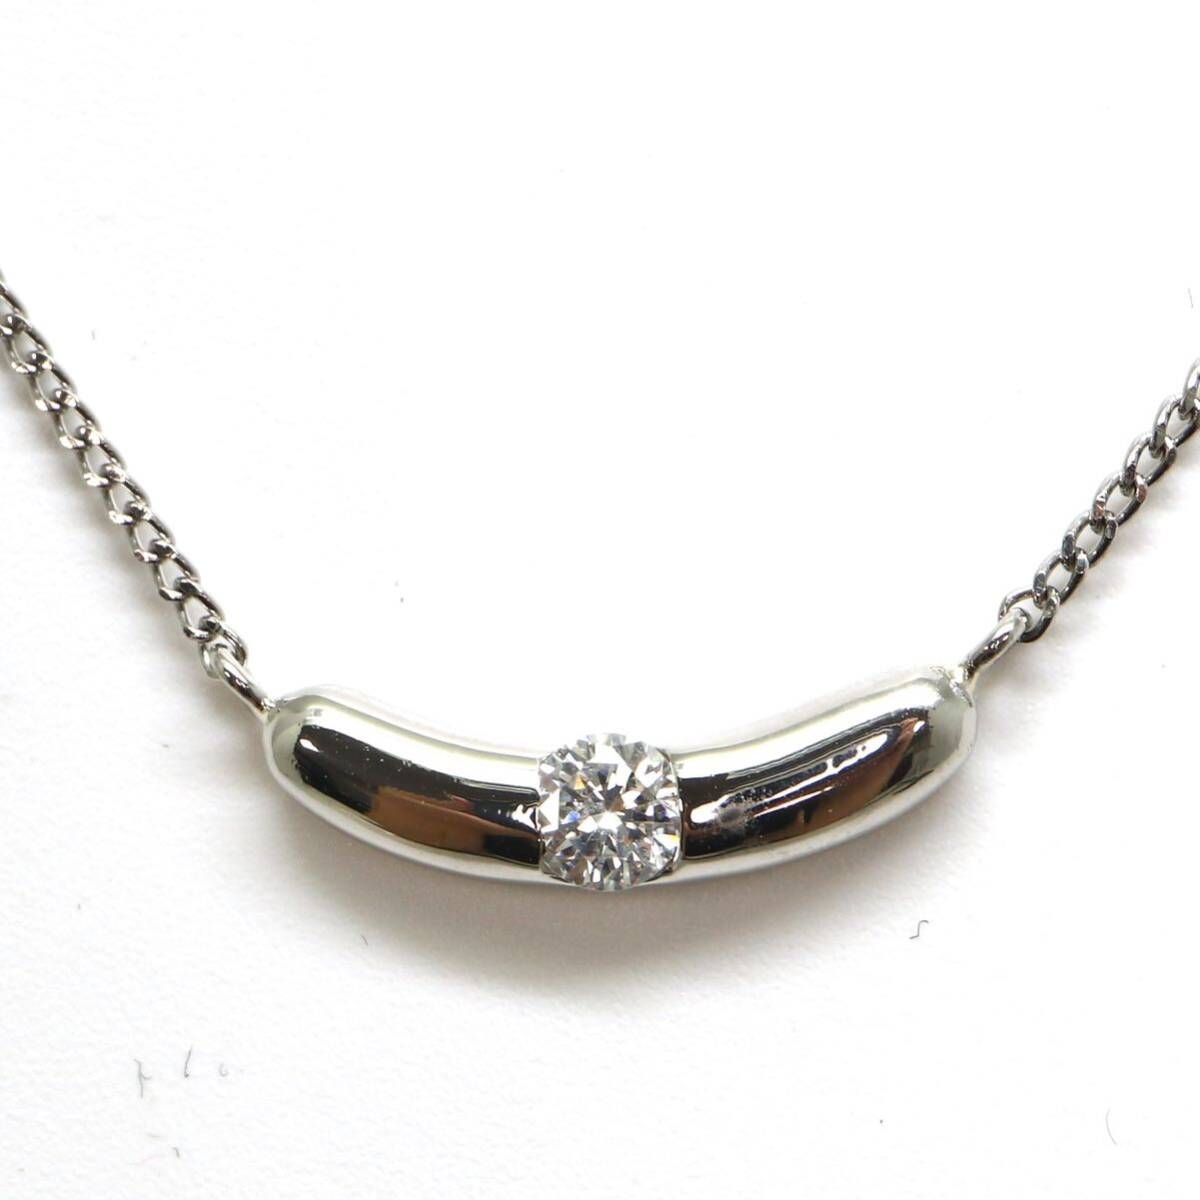 VENDOME(ヴァンドーム)◆Pt900/Pt850 天然ダイヤモンドネックレス◆A 約3.1g 約40.5cm diamond jewelry ジュエリー necklace EA5/EA6の画像1